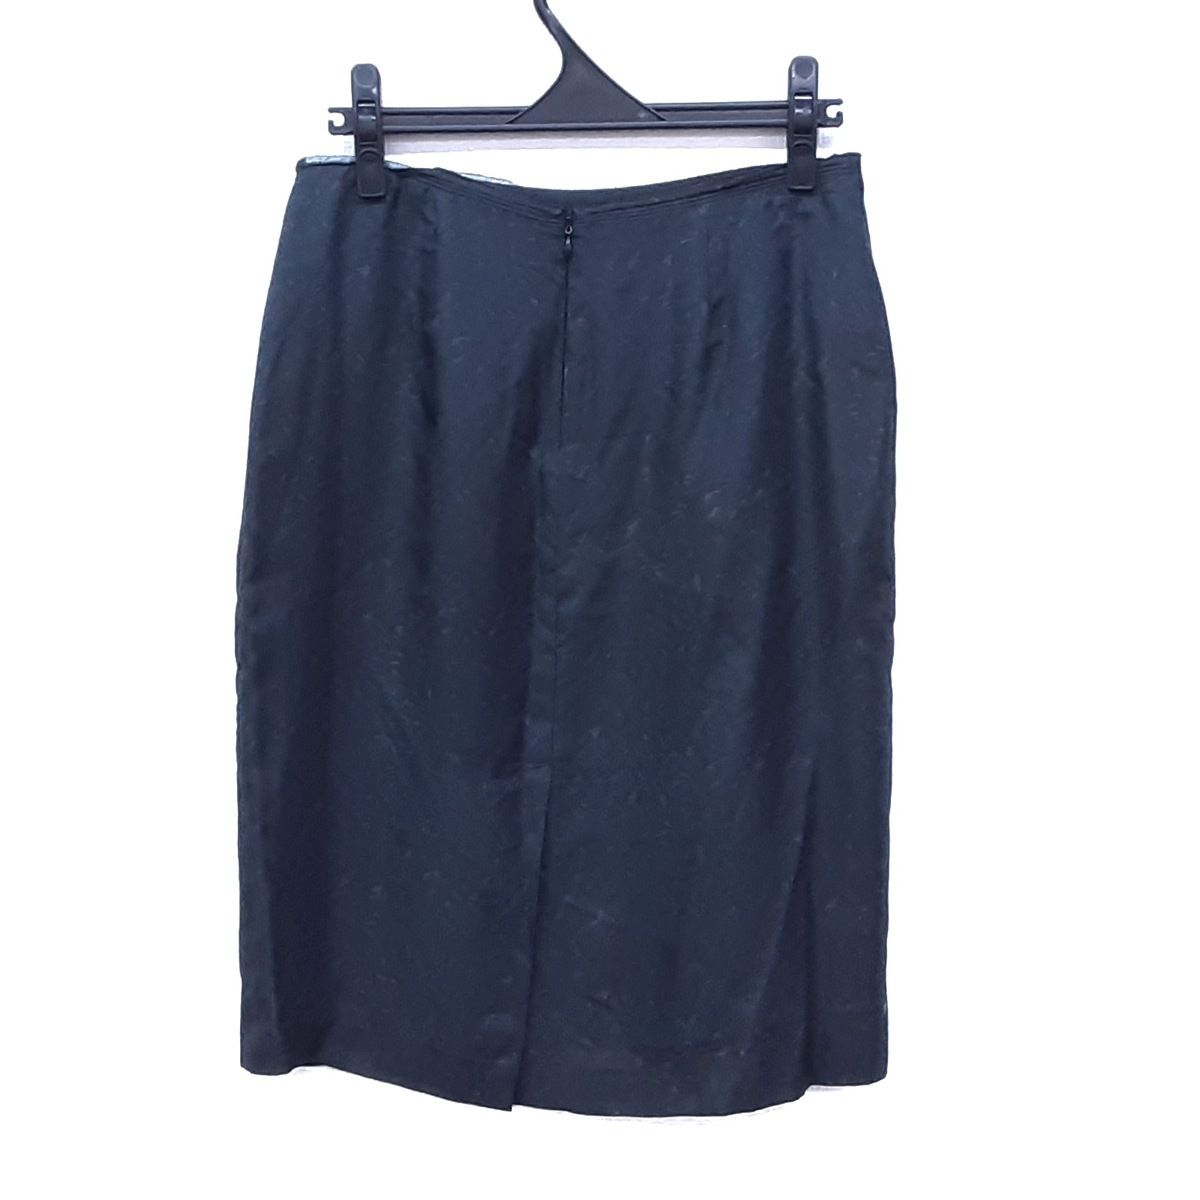 PRADA(プラダ) スカート サイズ42 M レディース美品 - 黒×グレー×ライトグリーン ひざ丈/シルク/花柄